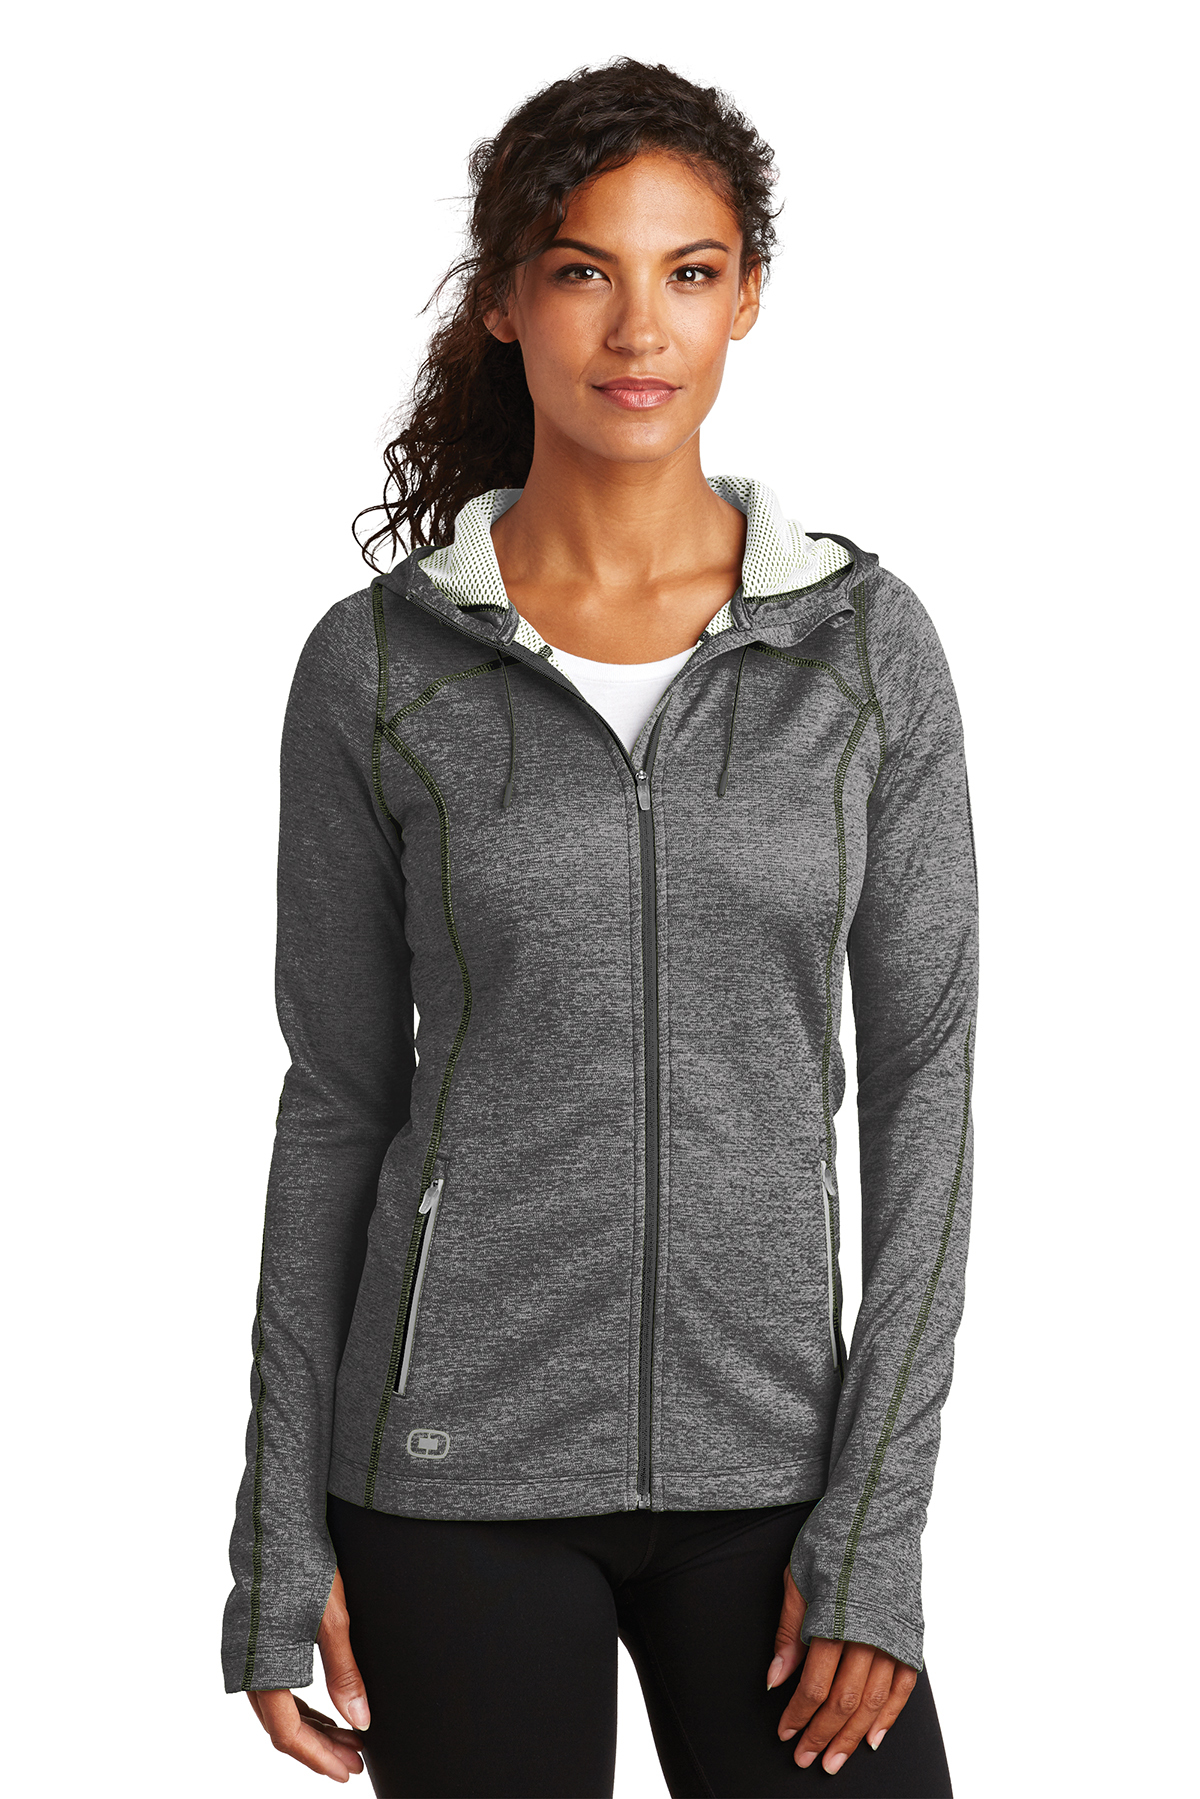 OGIO® ENDURANCE Ladies Pursuit Full-Zip | Ladies/Women | Sweatshirts ...